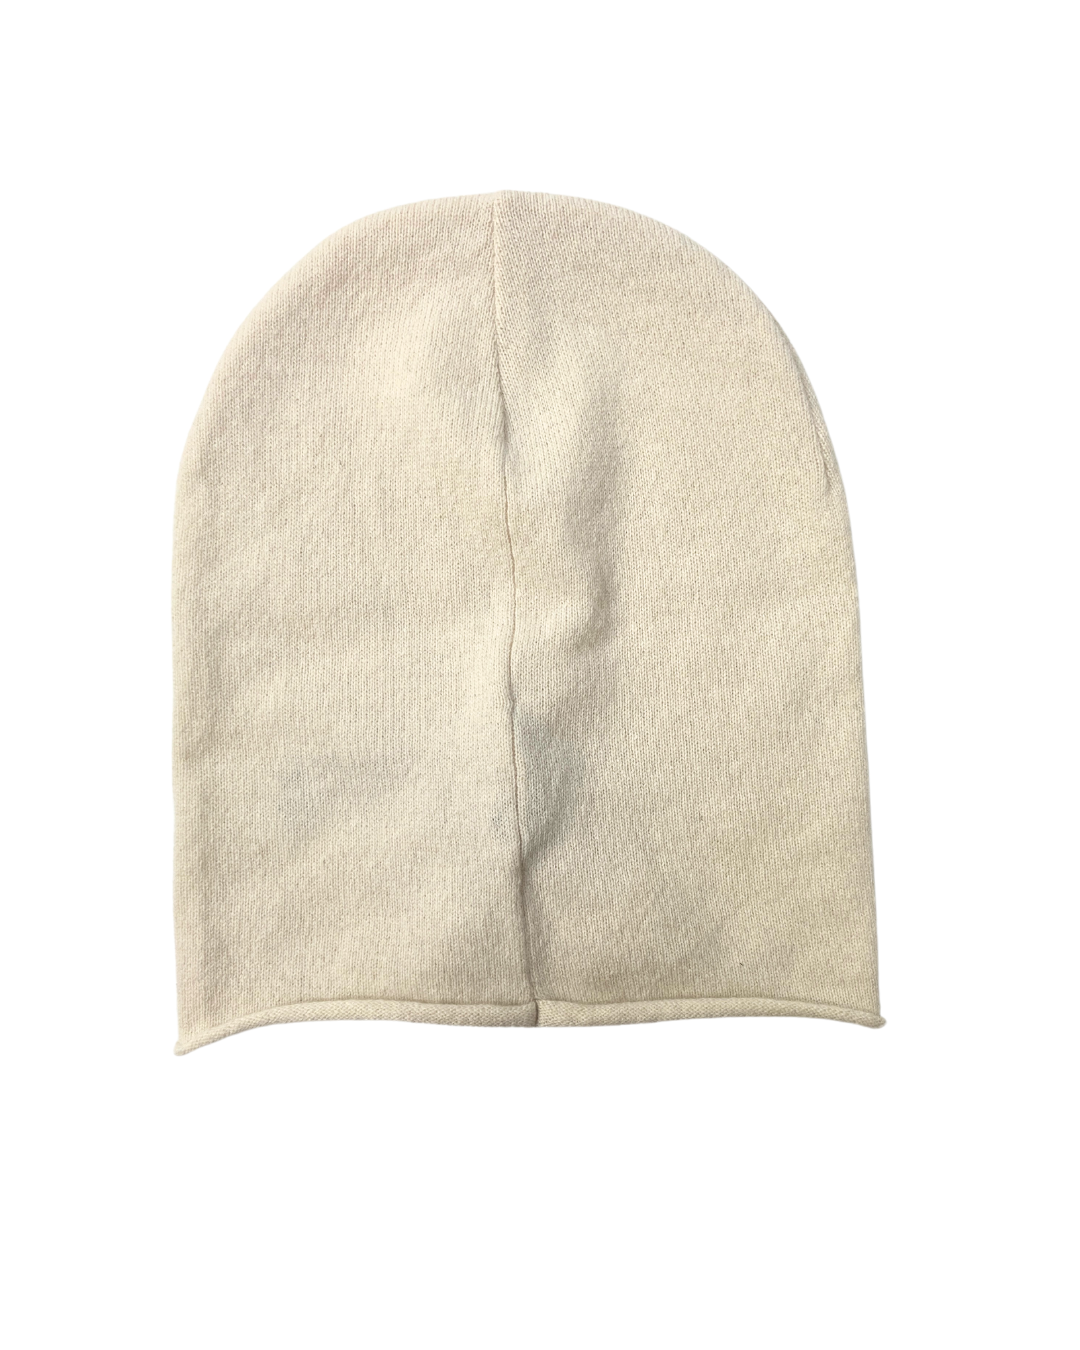 Grana Cream Knit Hat